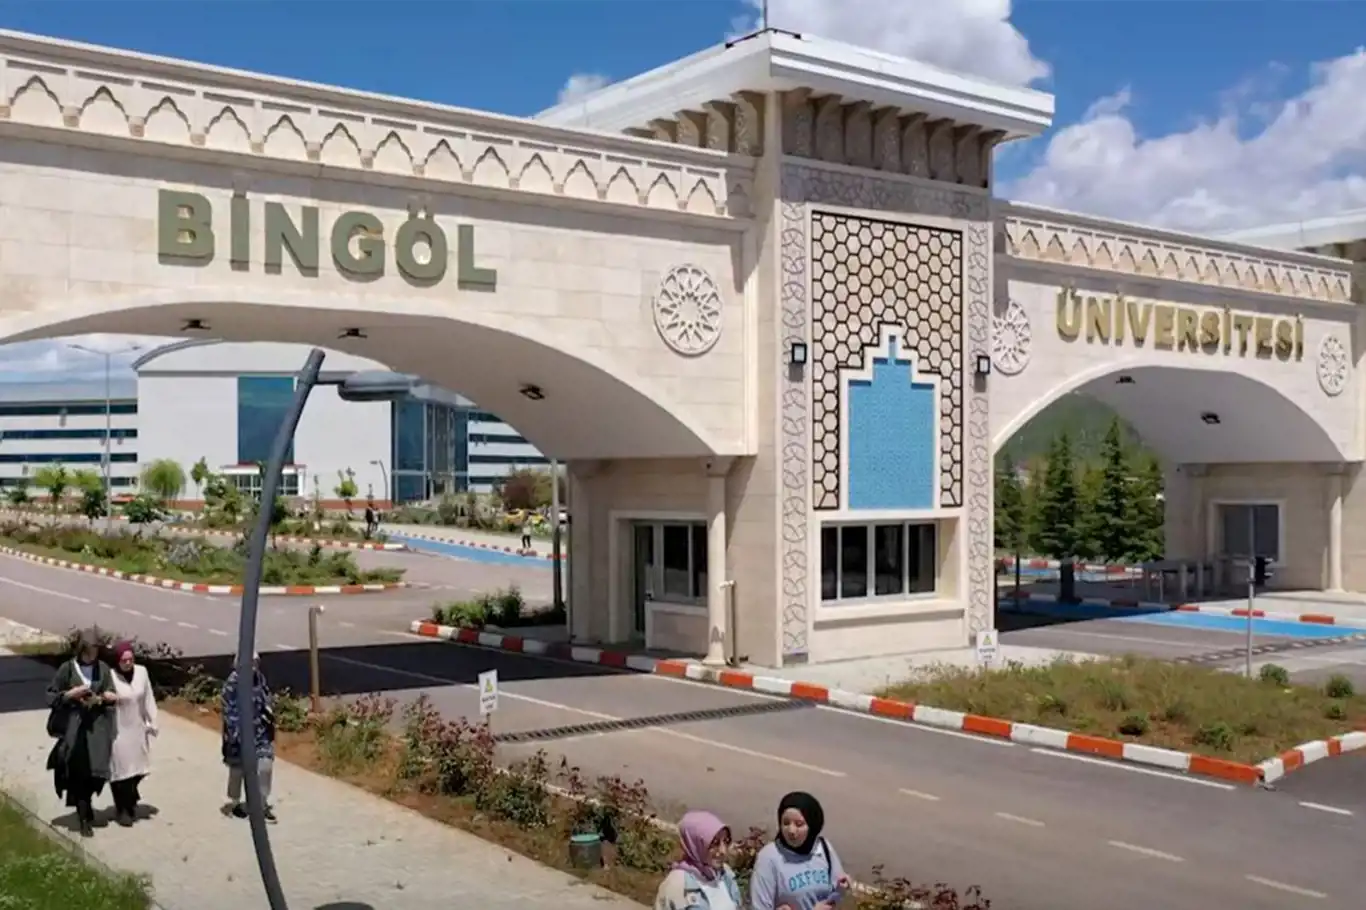 bingol universitesi find and study 3 - Bingol University